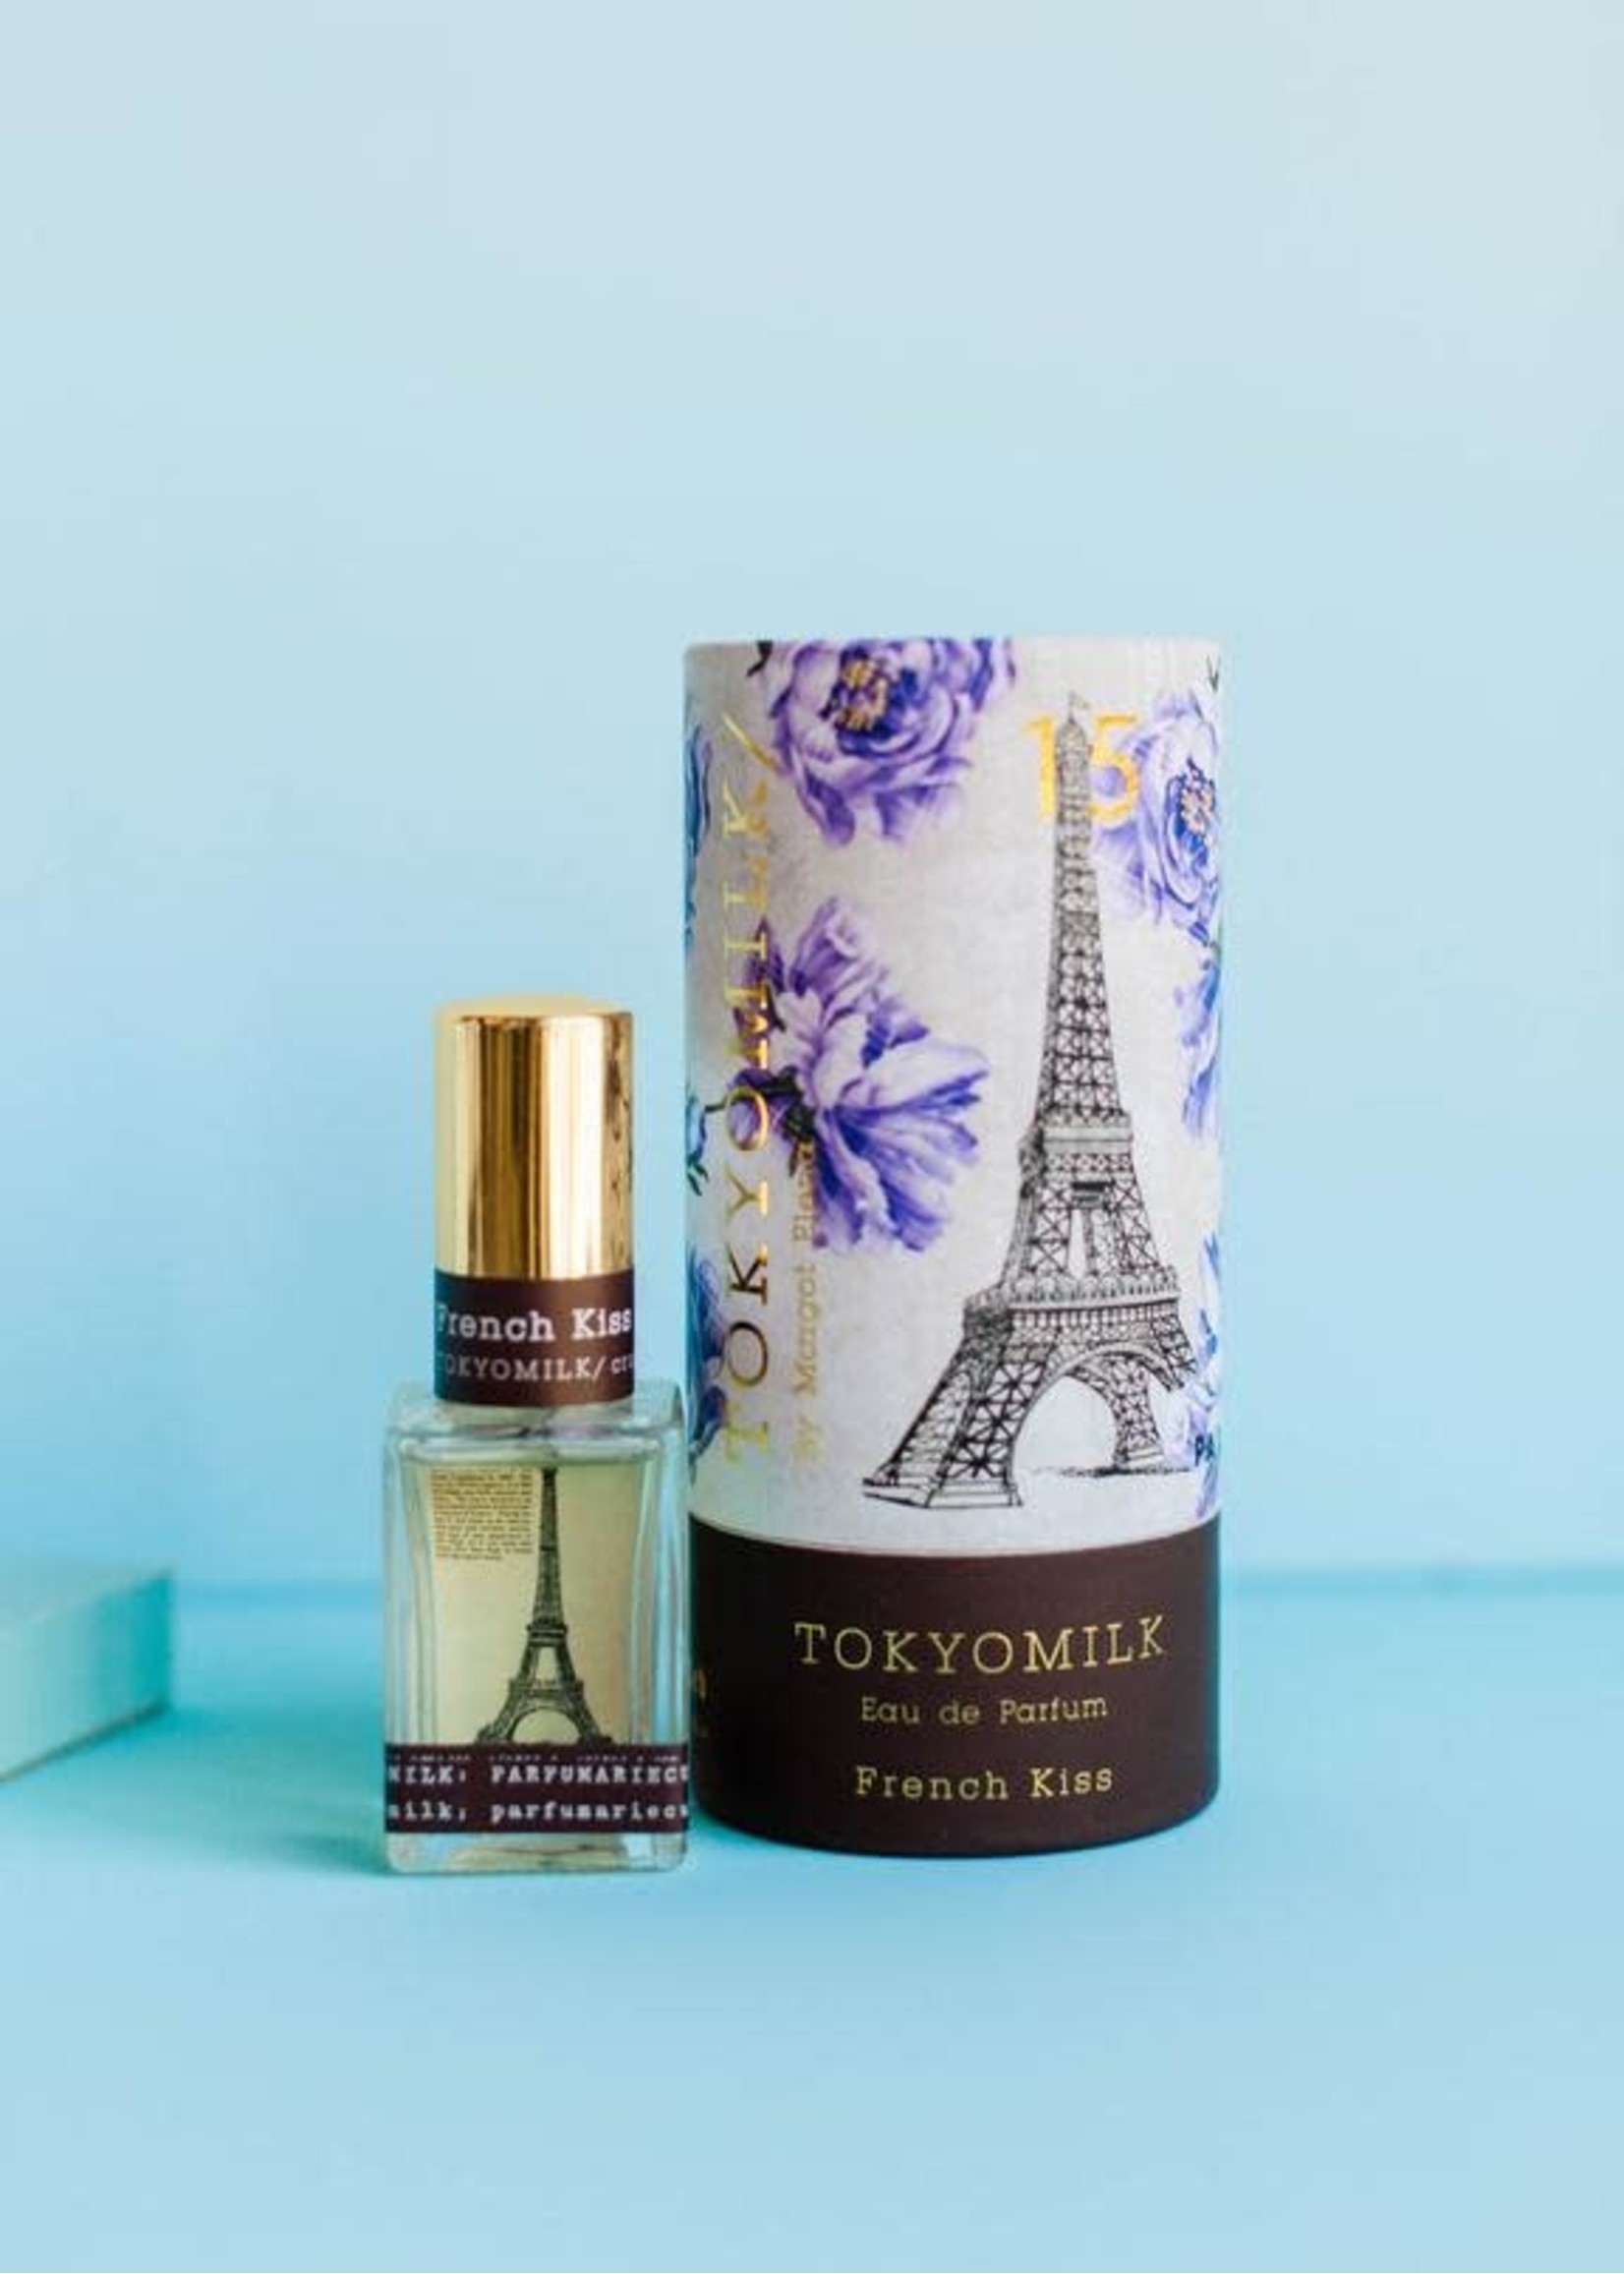 Tokyo Milk Tokyomilk Perfume (French Kiss)